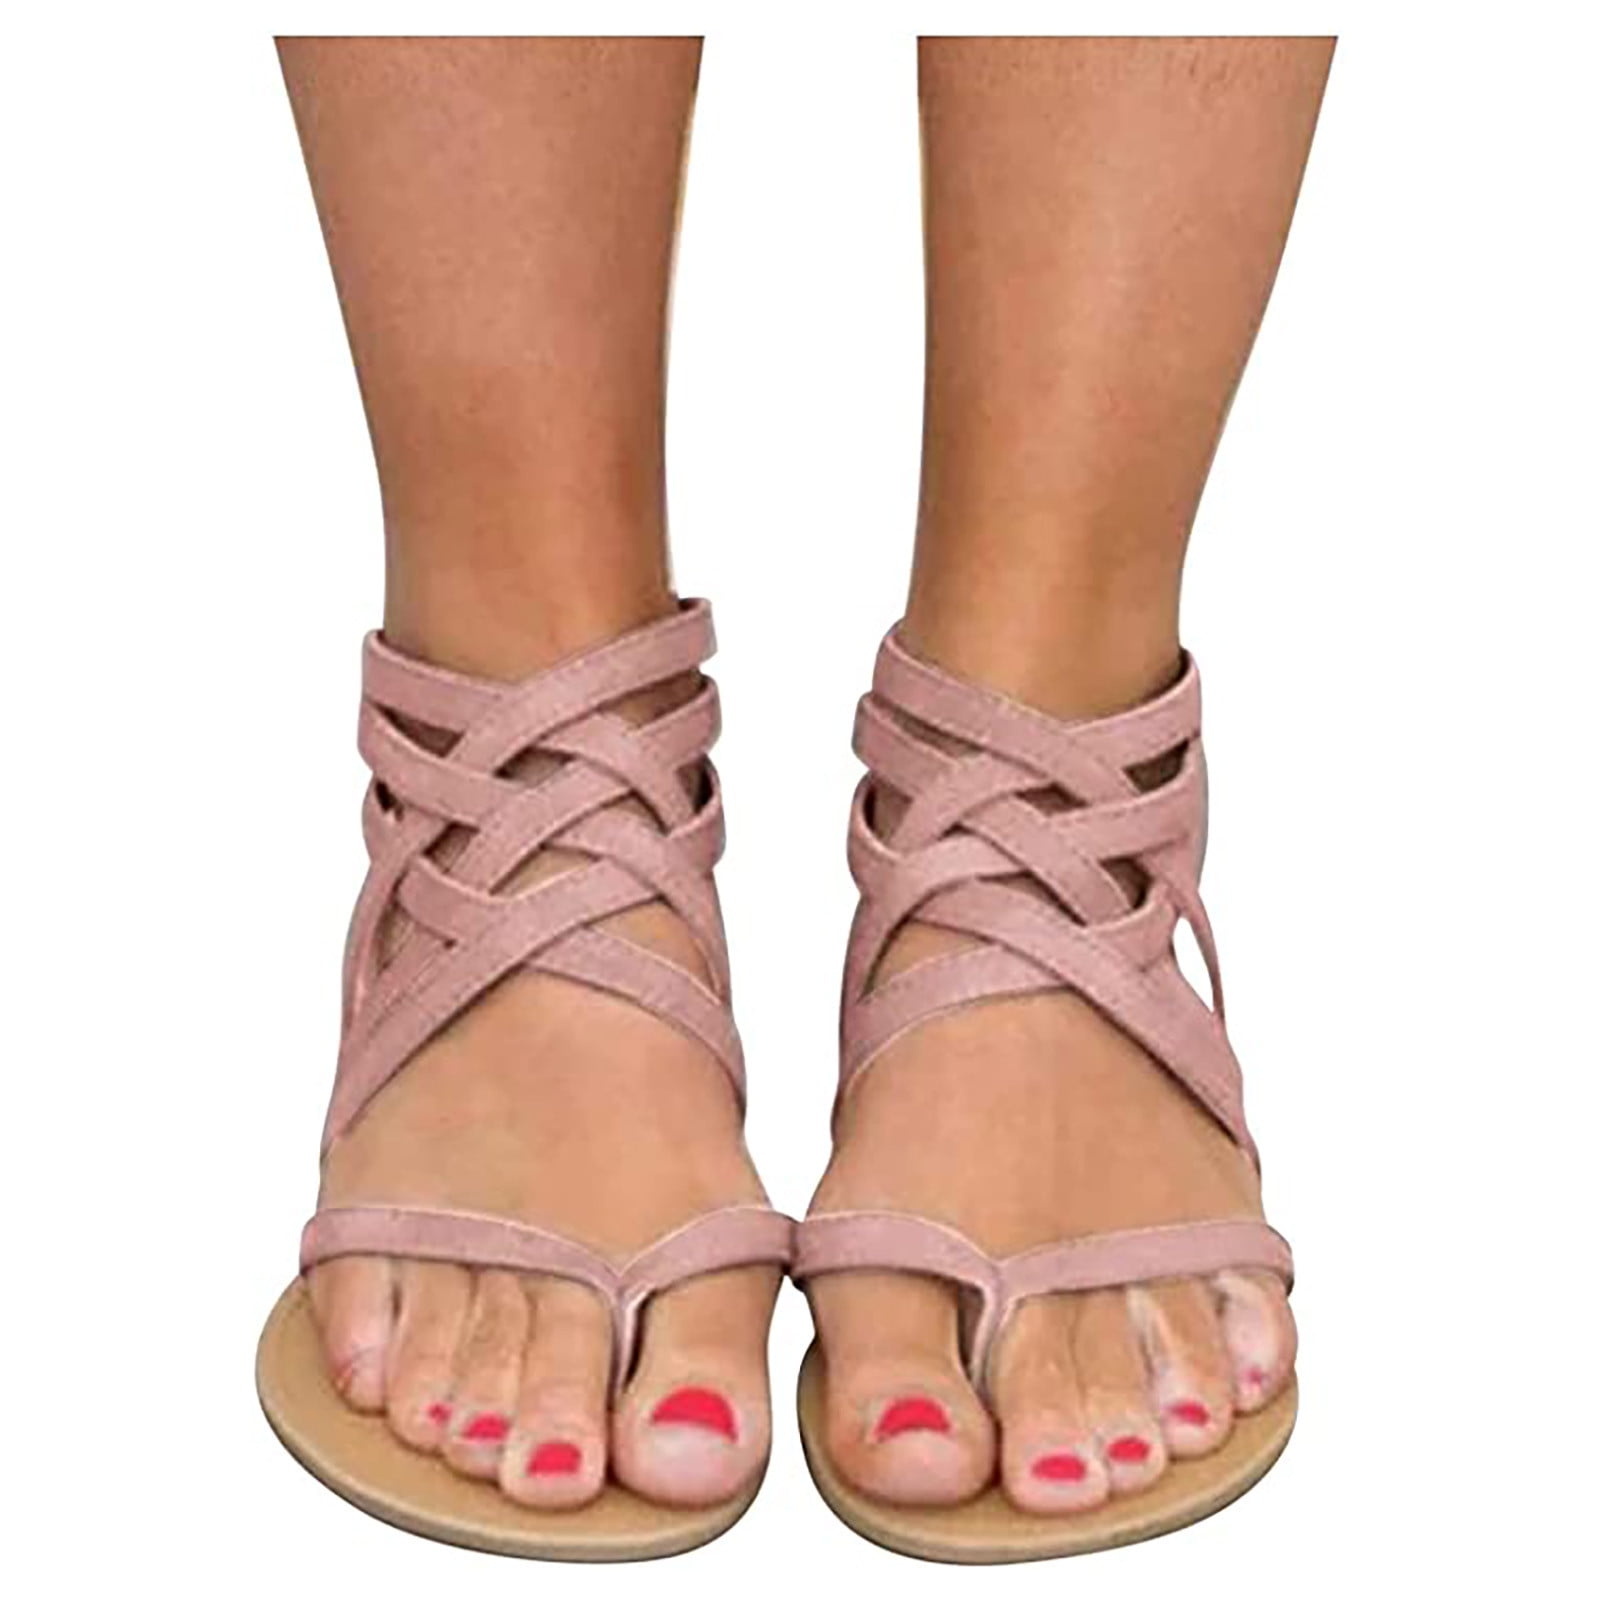 Sandals for Women Dressy,Womens Bohemia Rainbow Platform Sandals Flat Gladiator Sandals Dress Shoes